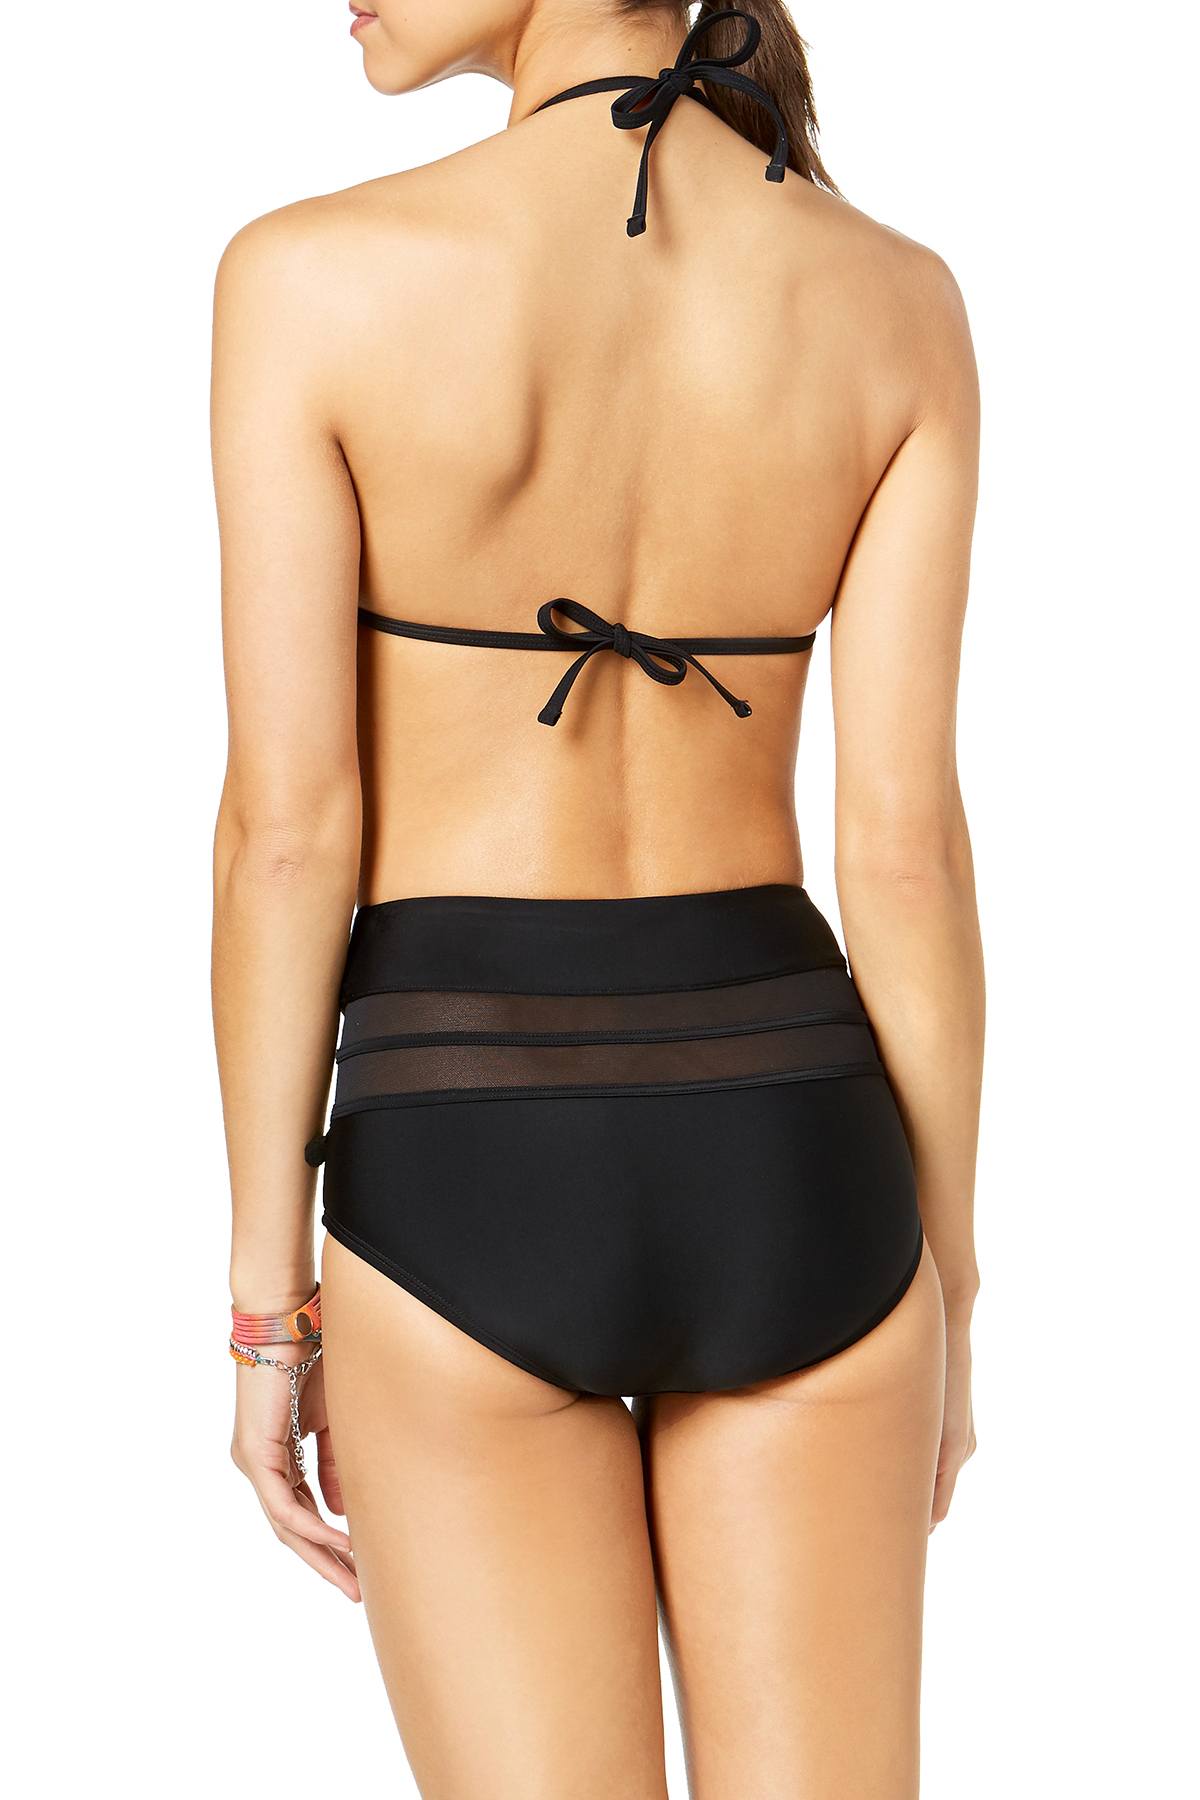 Hula Honey Black Mesh-Insert Pom Pom High-Waist Bikini Bottom